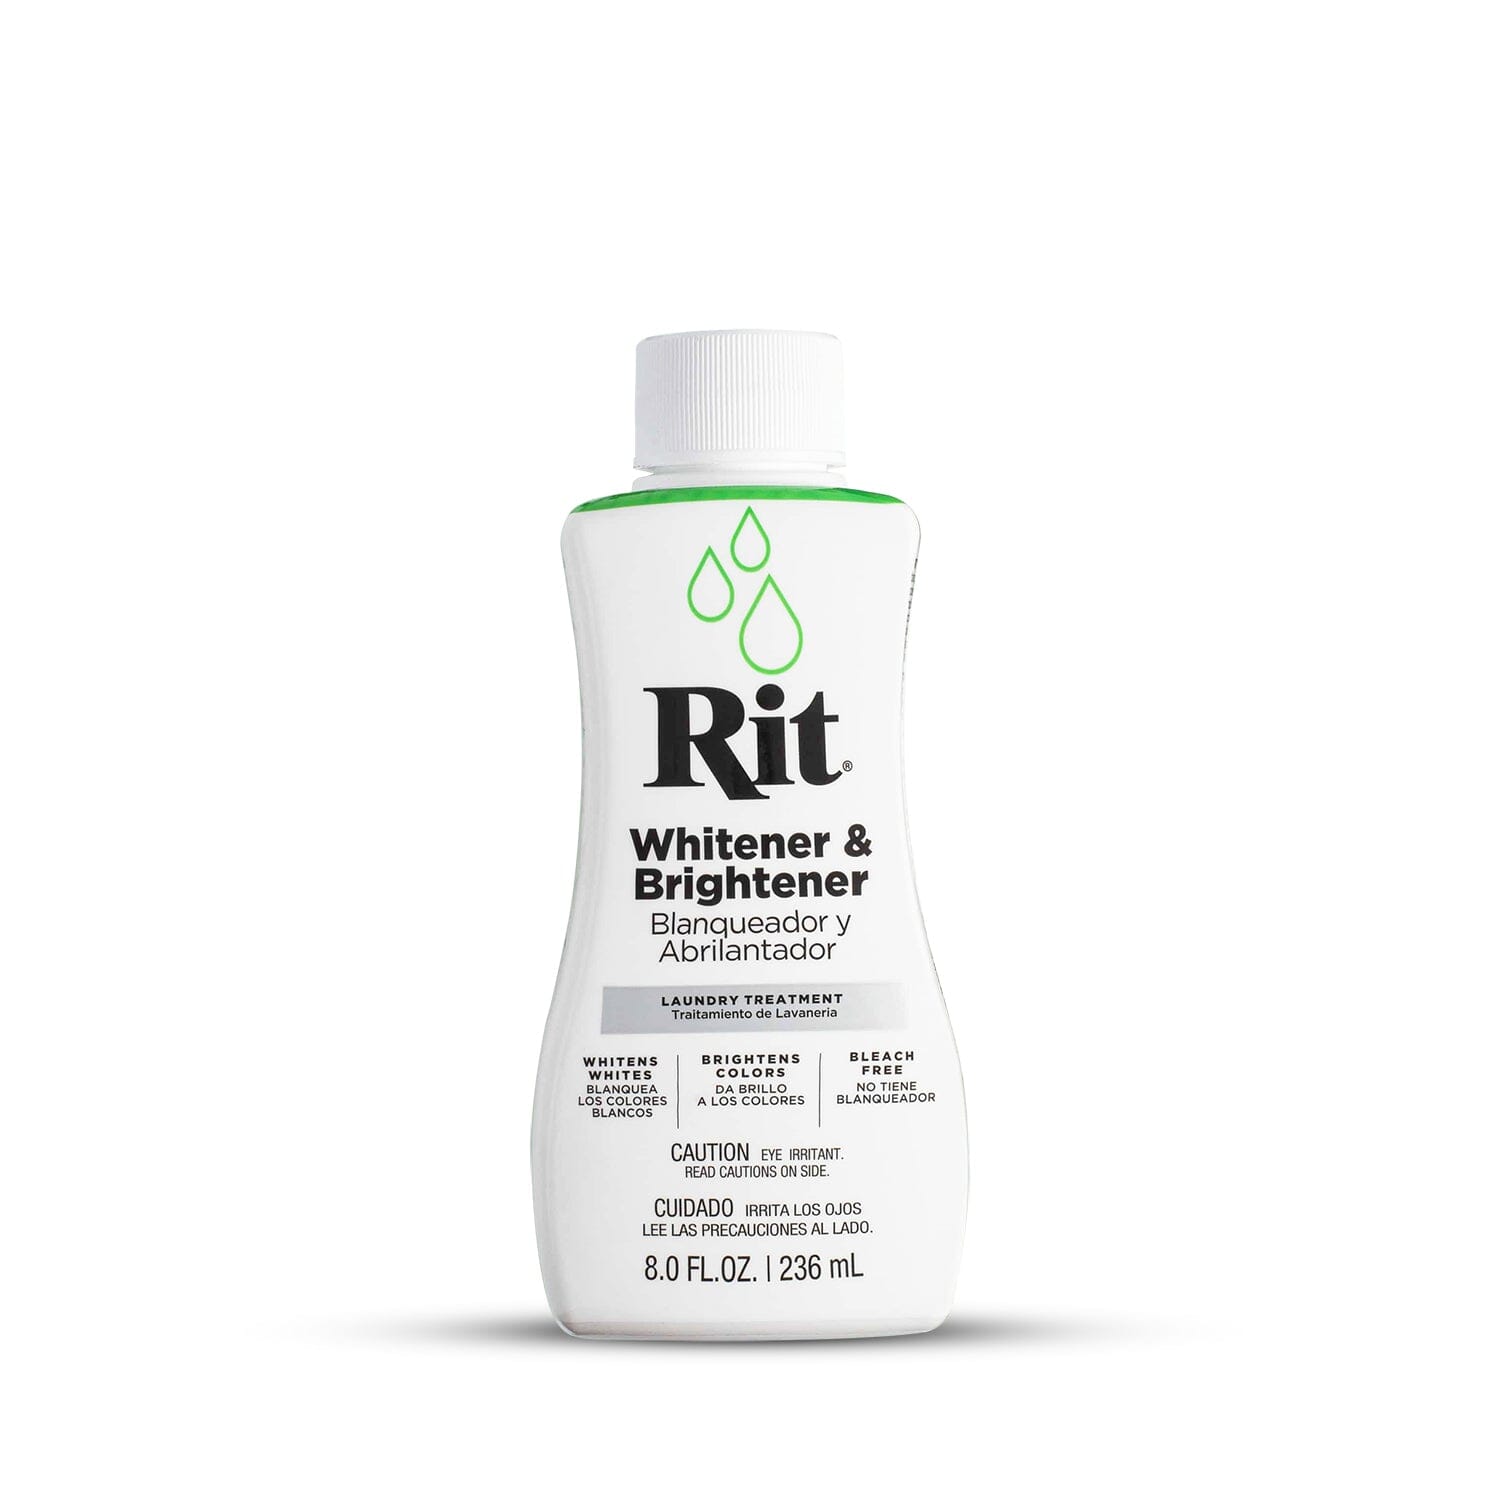 Rit Whitener & Brightener Treatment